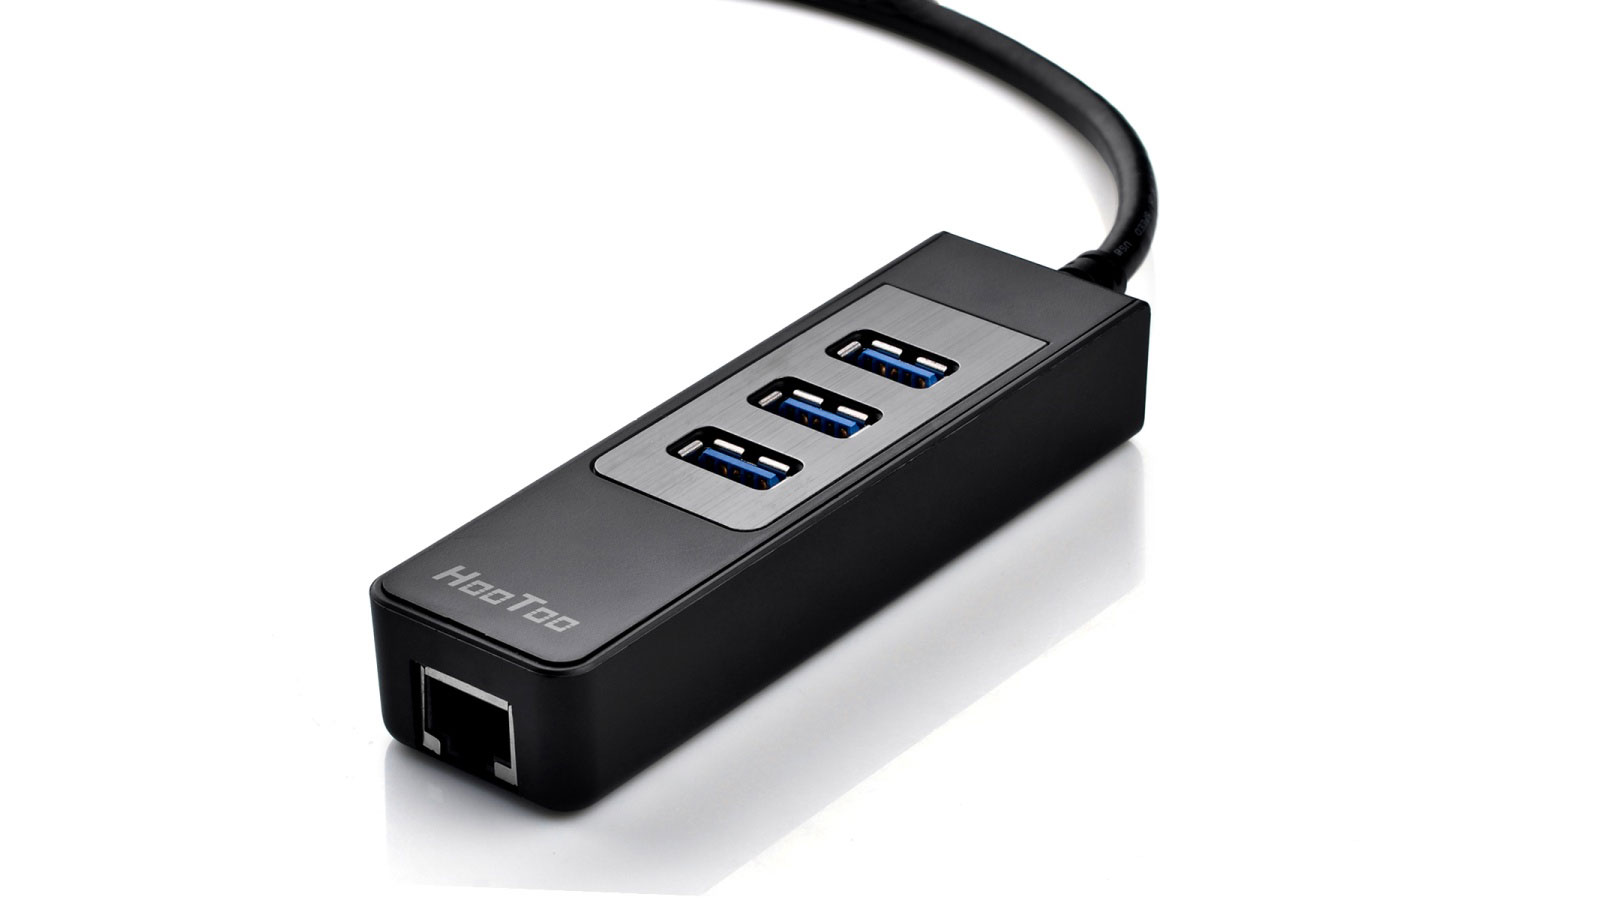 Флешка usb c usb 3.0. USB Hub USB 3.0 + lan Adapter (3-Port) 4737 (к). Юсб хаб Лан. USB 3.0 Hub model: 303. Сетевой адаптер USB 3.0 Cudy wu1300s.